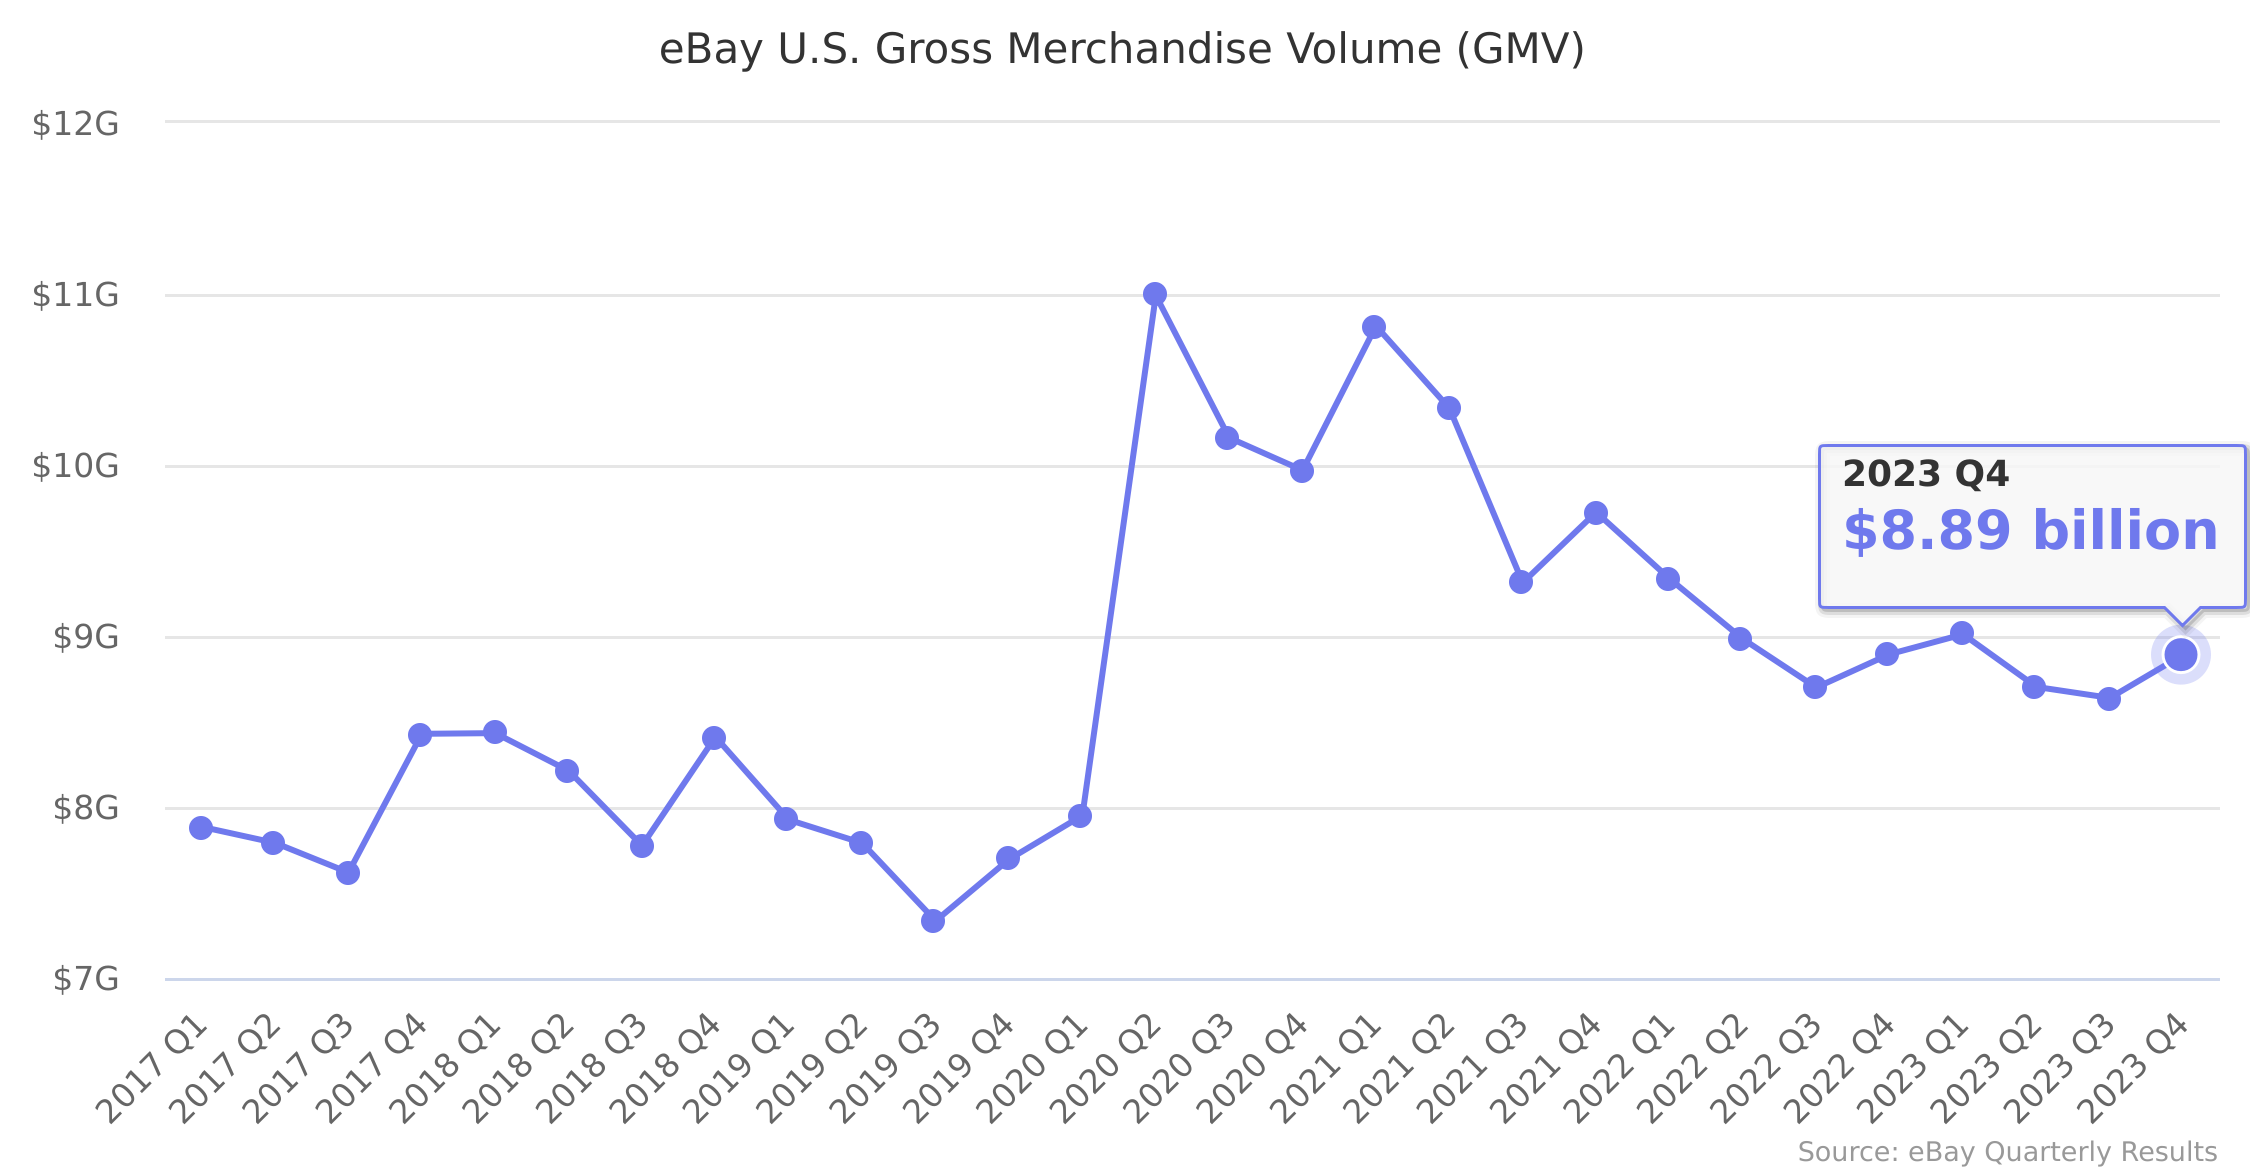 eBay U.S. Gross Merchandise Volume (GMV) 2017-2023